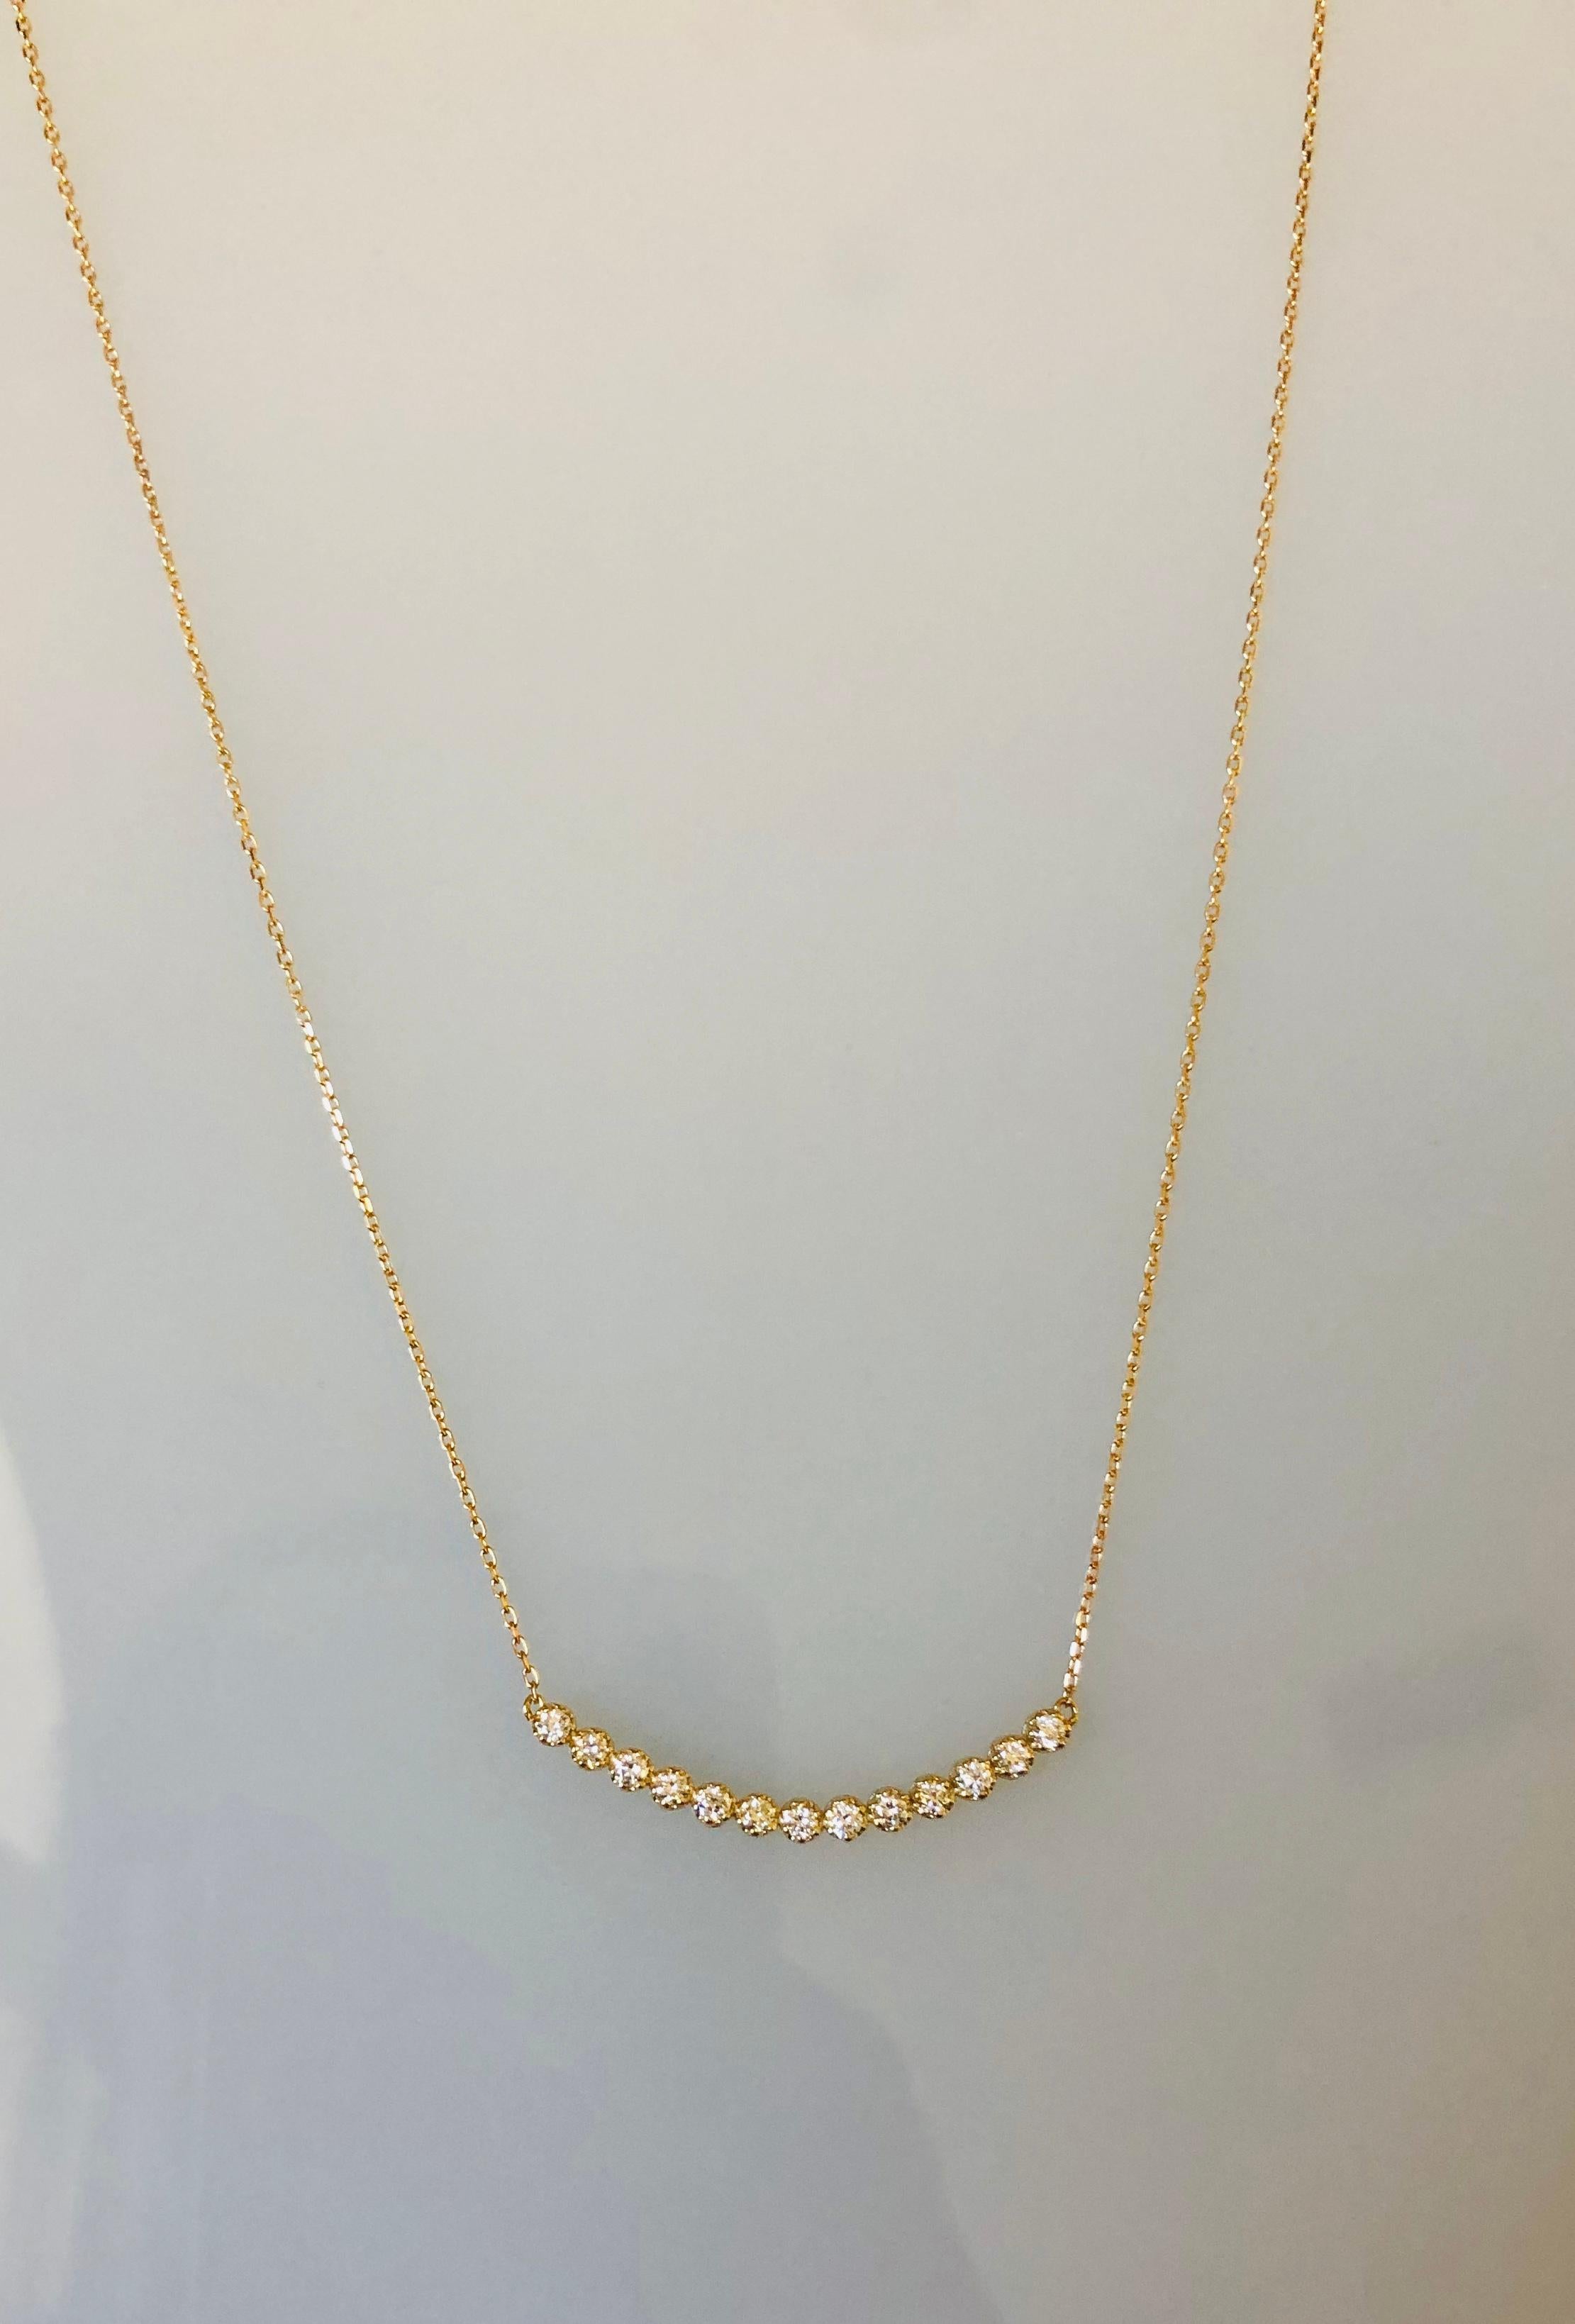 Round Cut 0.51 Carat Diamond Pendant with Chain Necklace 14 Karat Yellow Gold